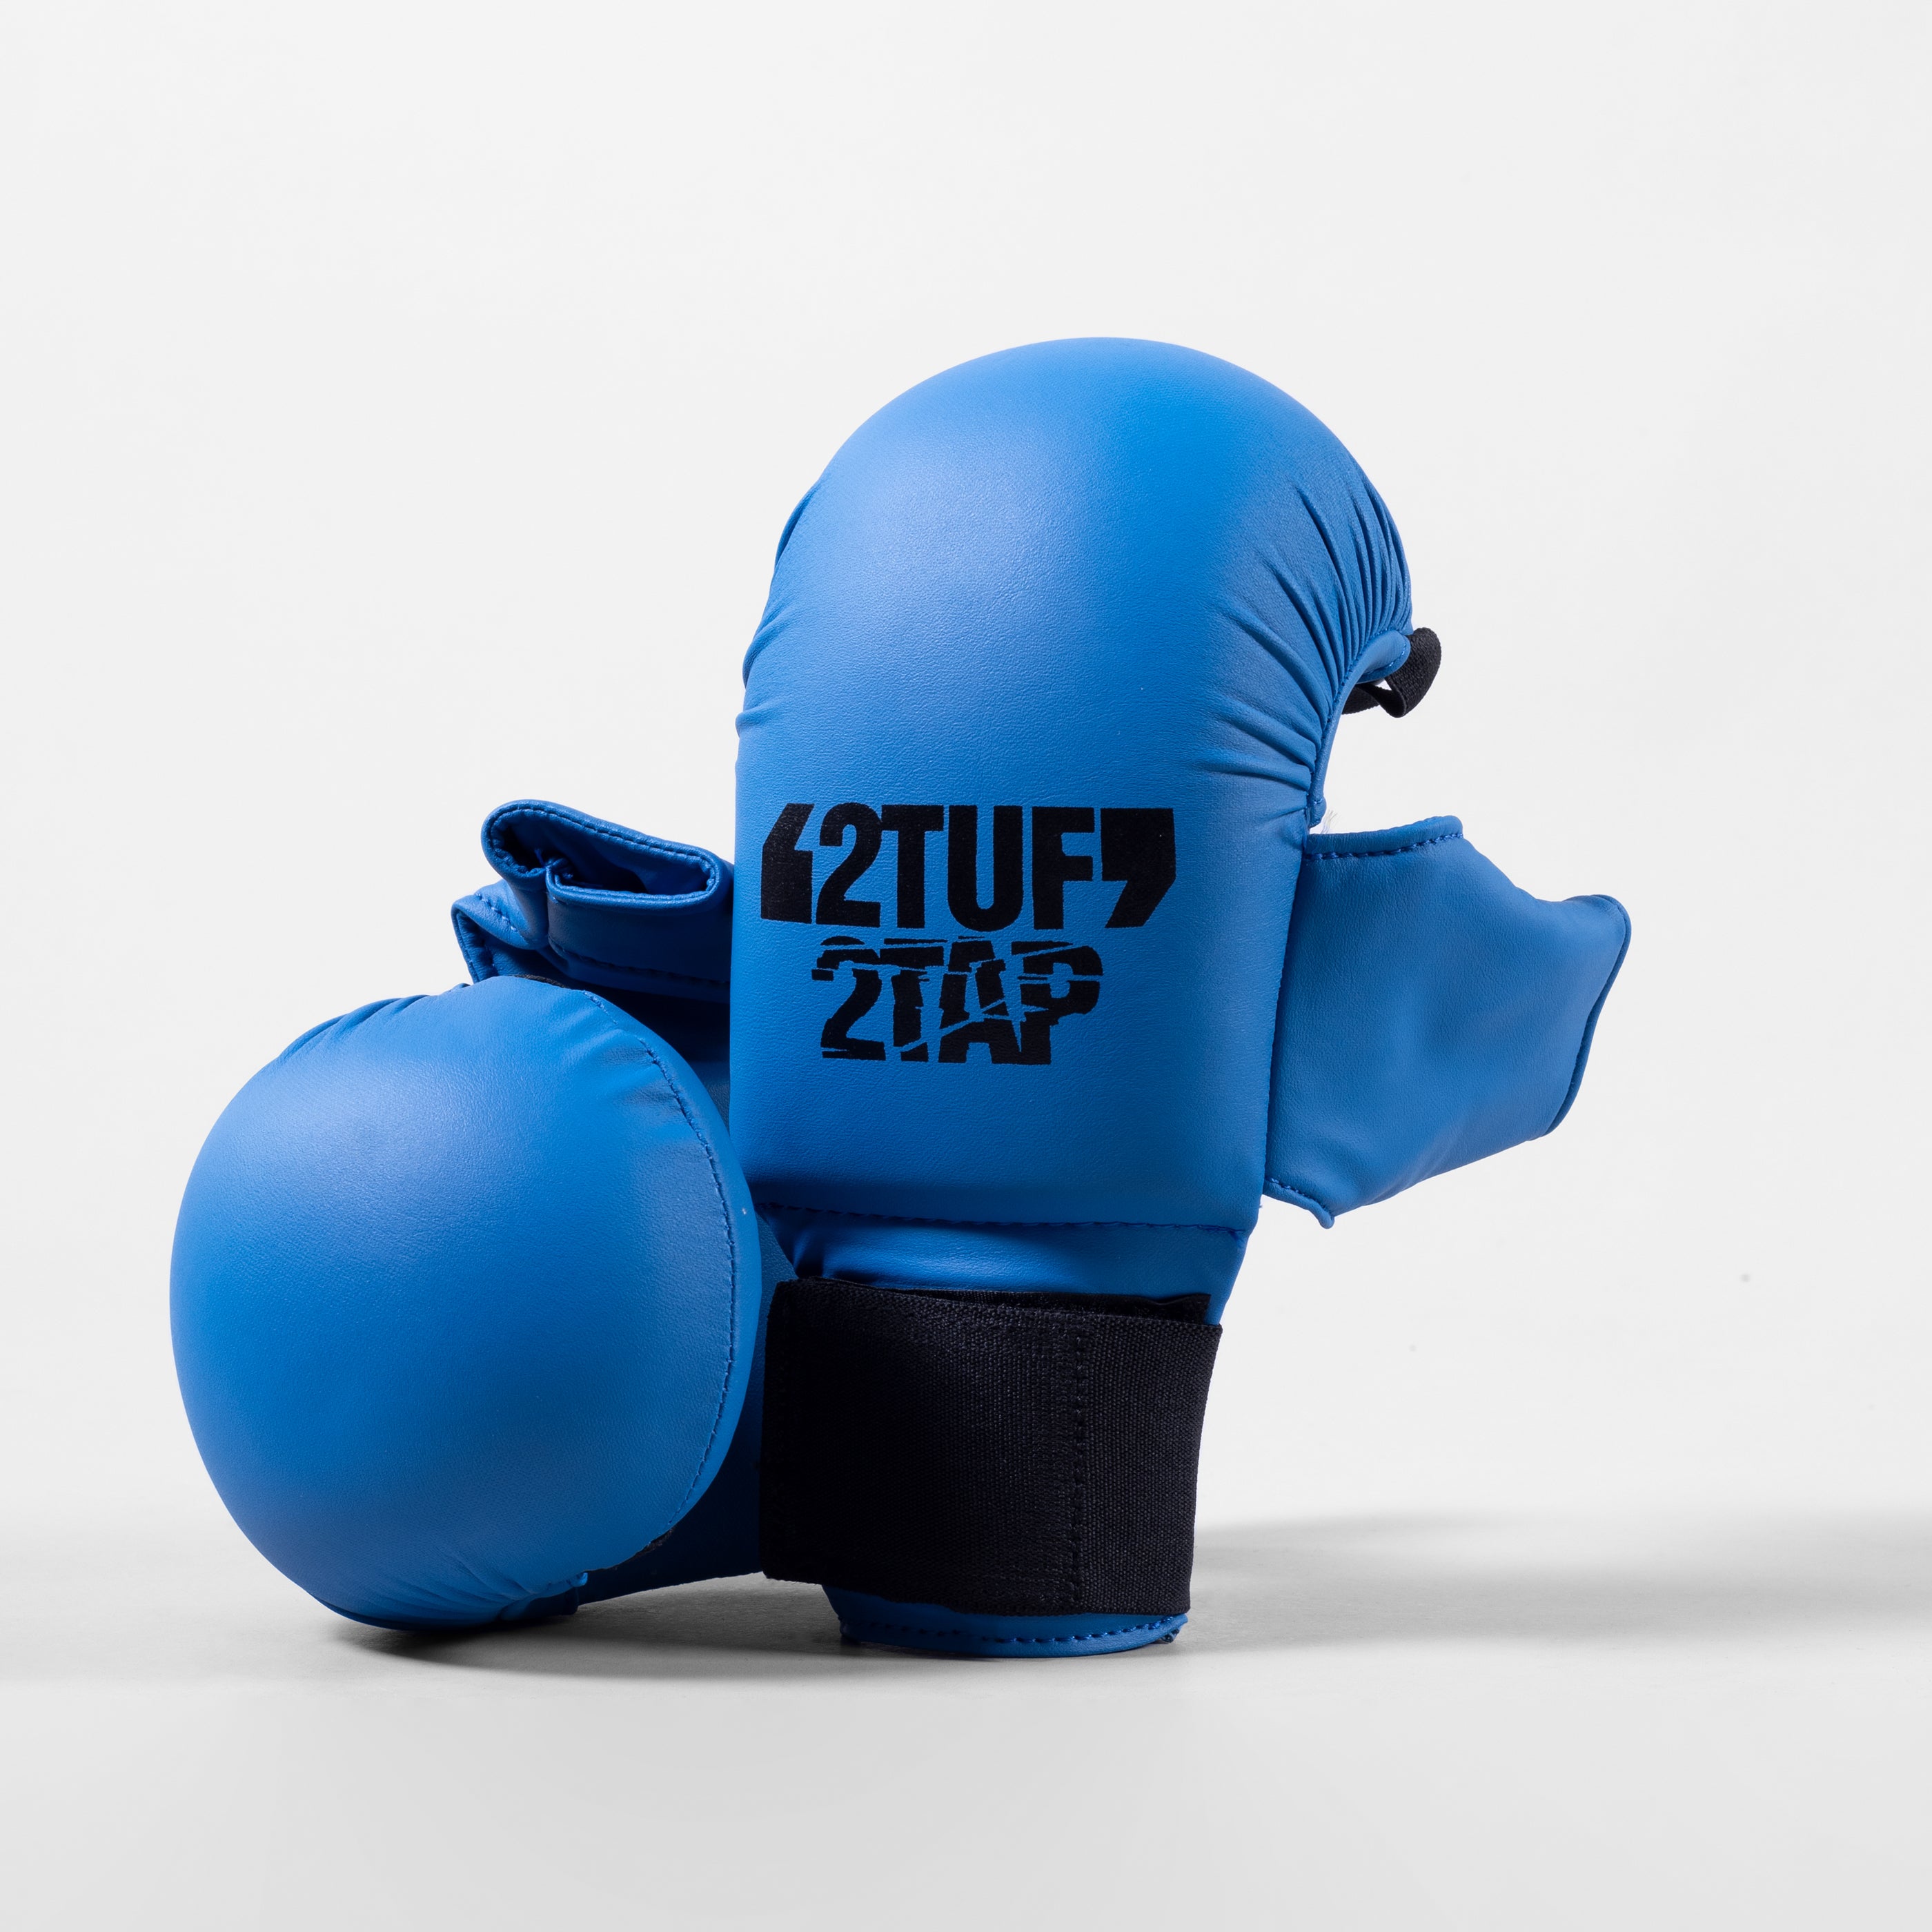 'Anzen' Karate Gloves - Thumb - Blue/Black 2TUF2TAP